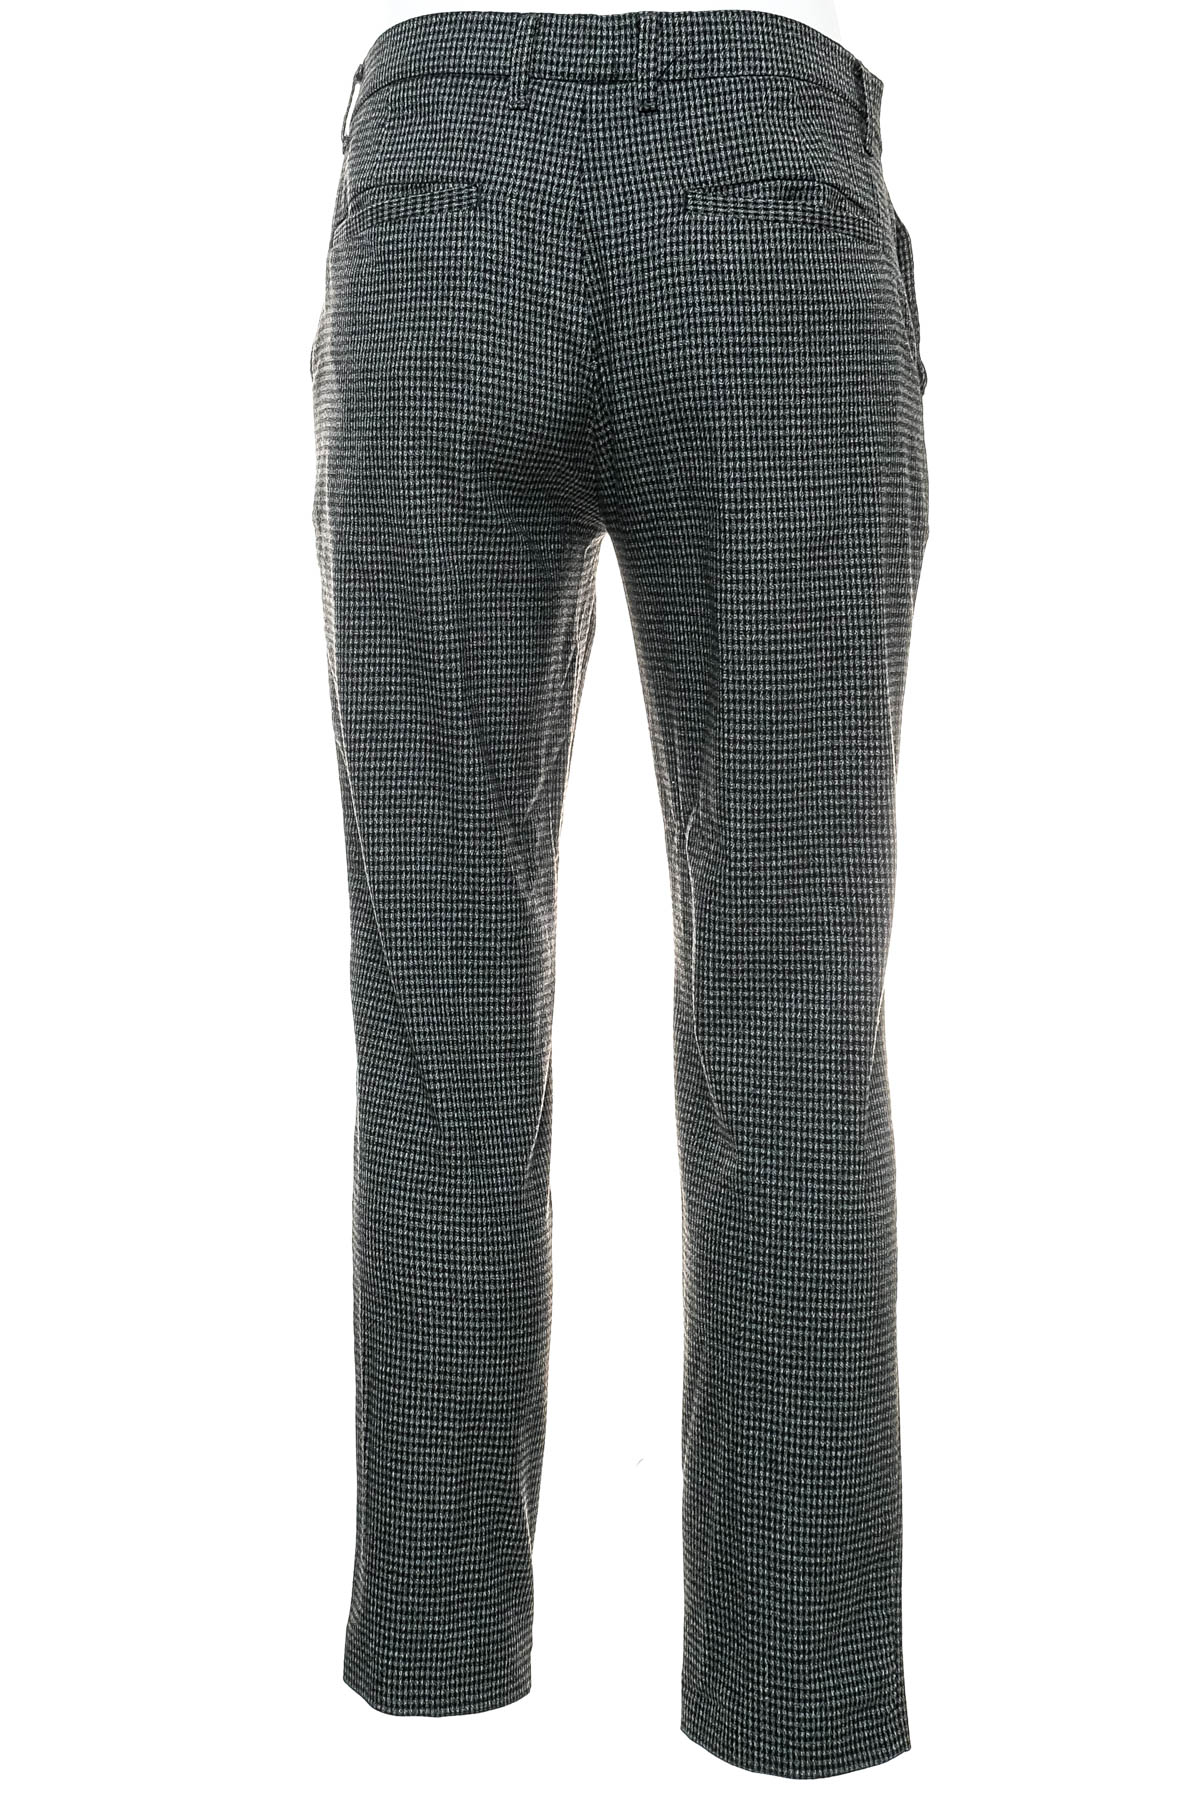 Men's trousers - Bershka - 1